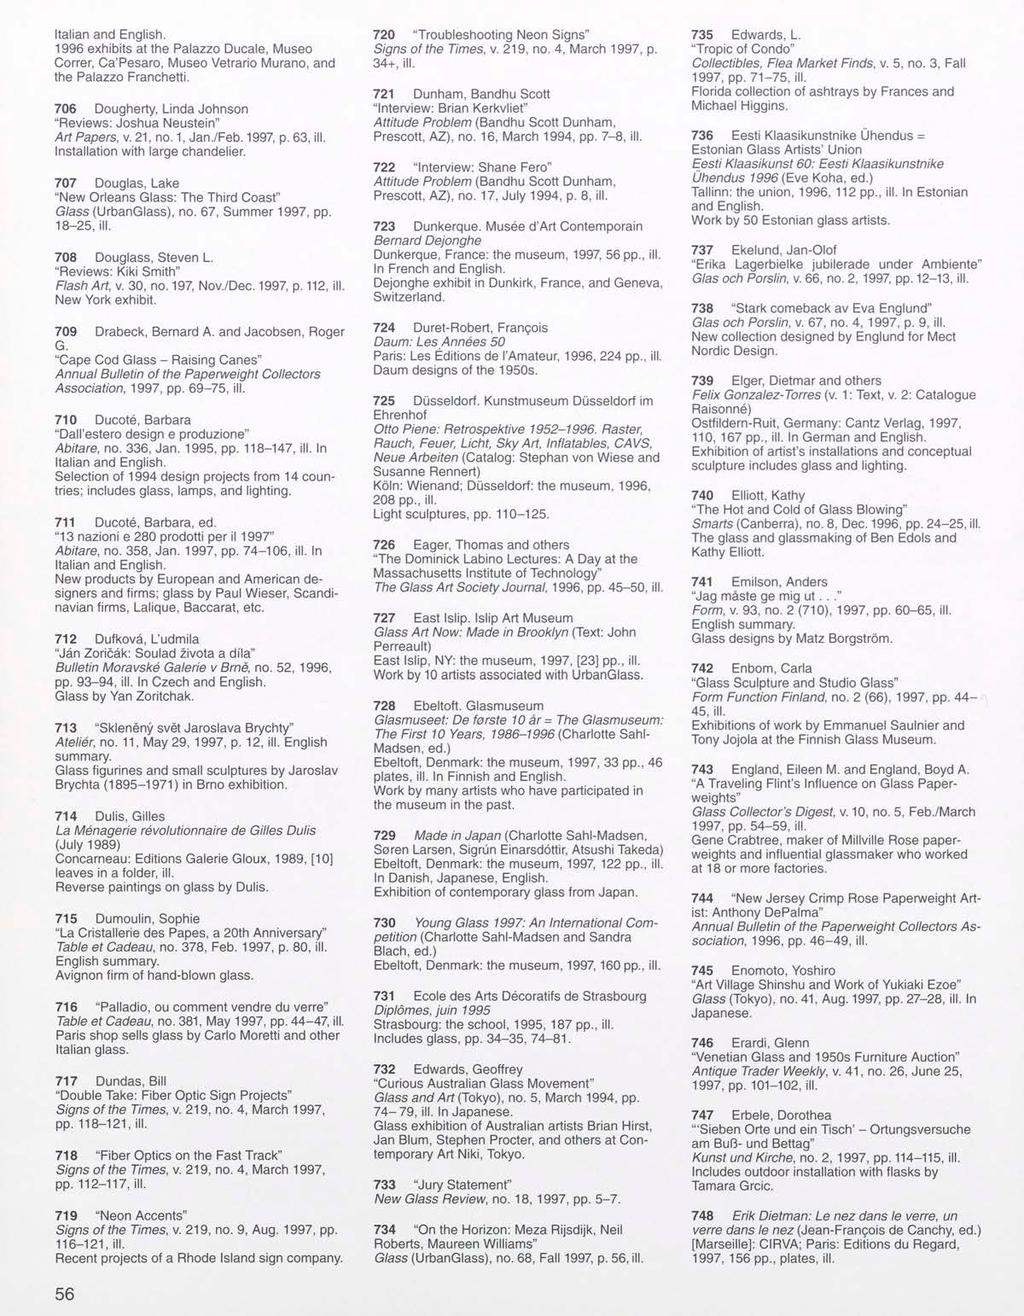 Italian 1996 exhibits at the Palazzo Ducale, Museo Correr, Ca'Pesaro, Museo Vetrario Murano, and the Palazzo Franchetti. 706 Dougherty, Linda Johnson "Reviews: Joshua Neustein" Art Papers, v. 21, no.